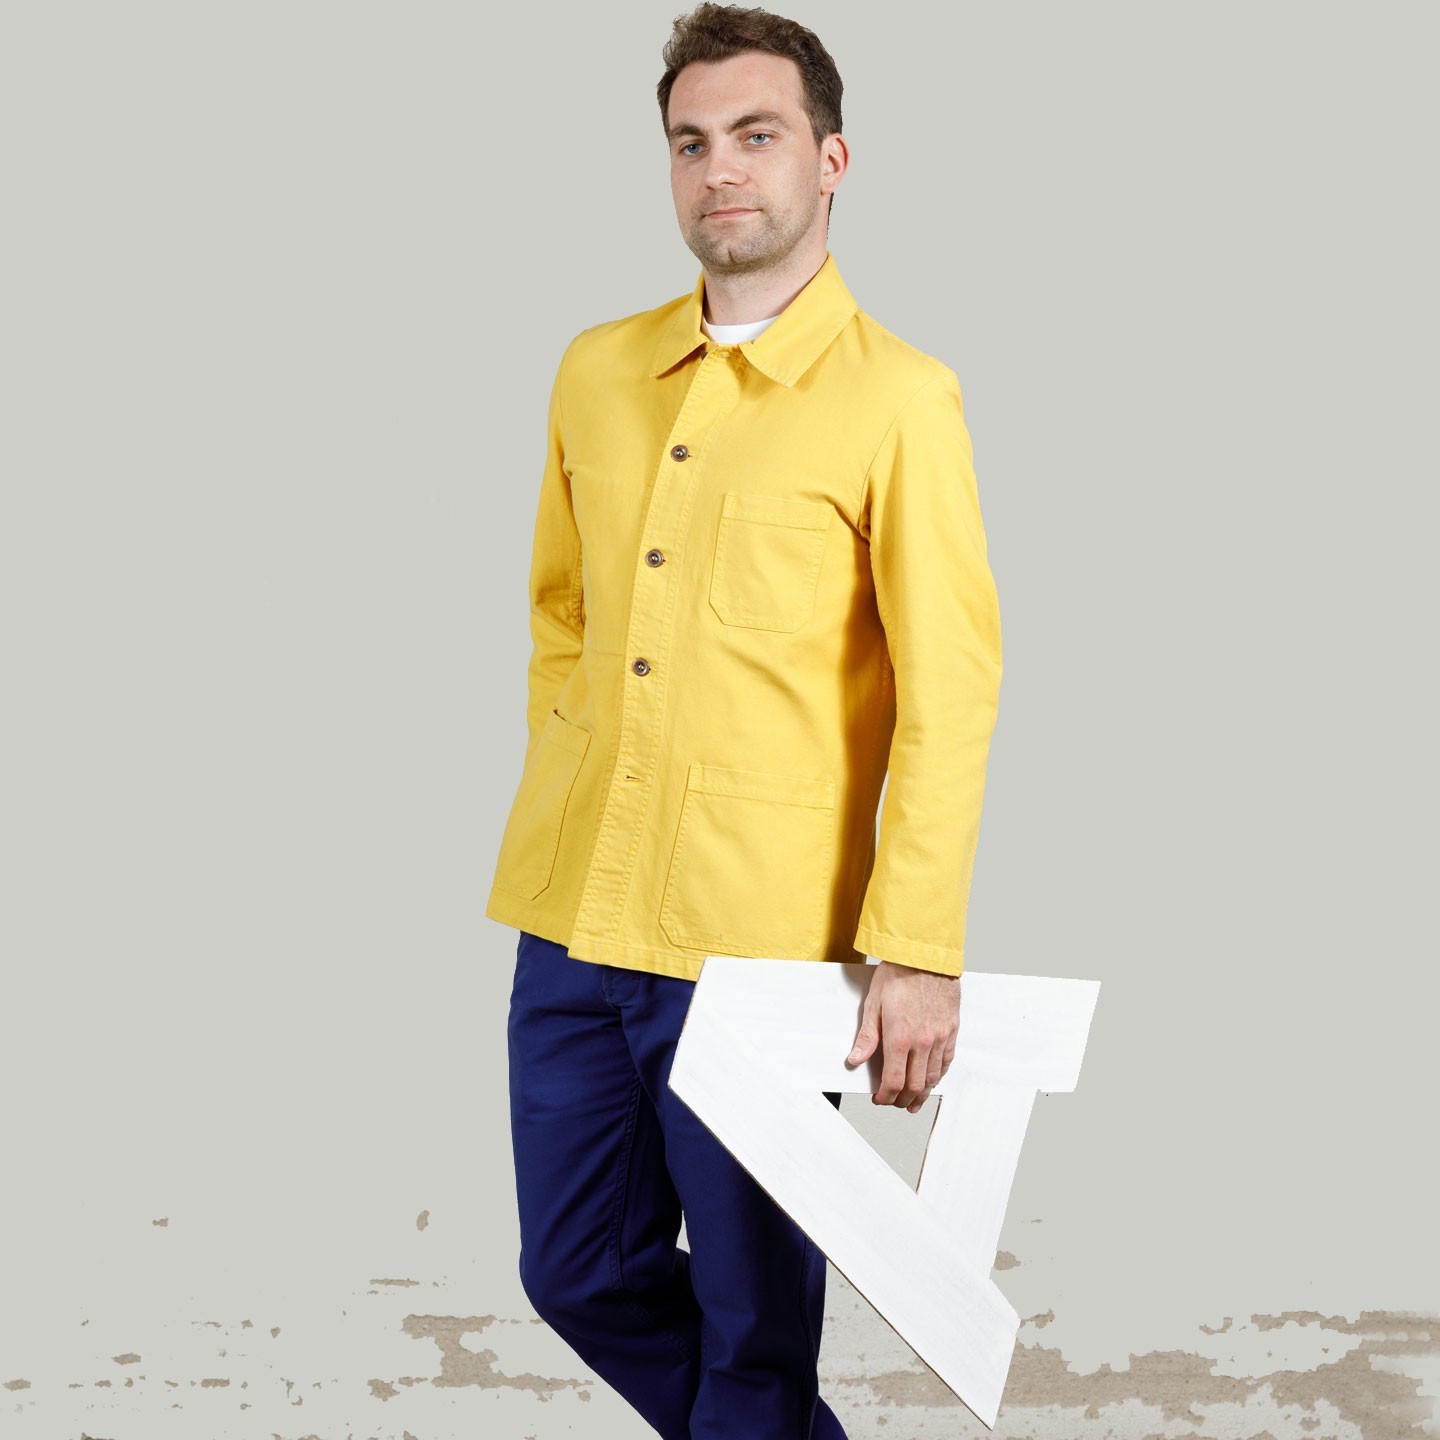 VETRA Workwear Jacket in organic cotton twill fabric 1C/5C pineapple